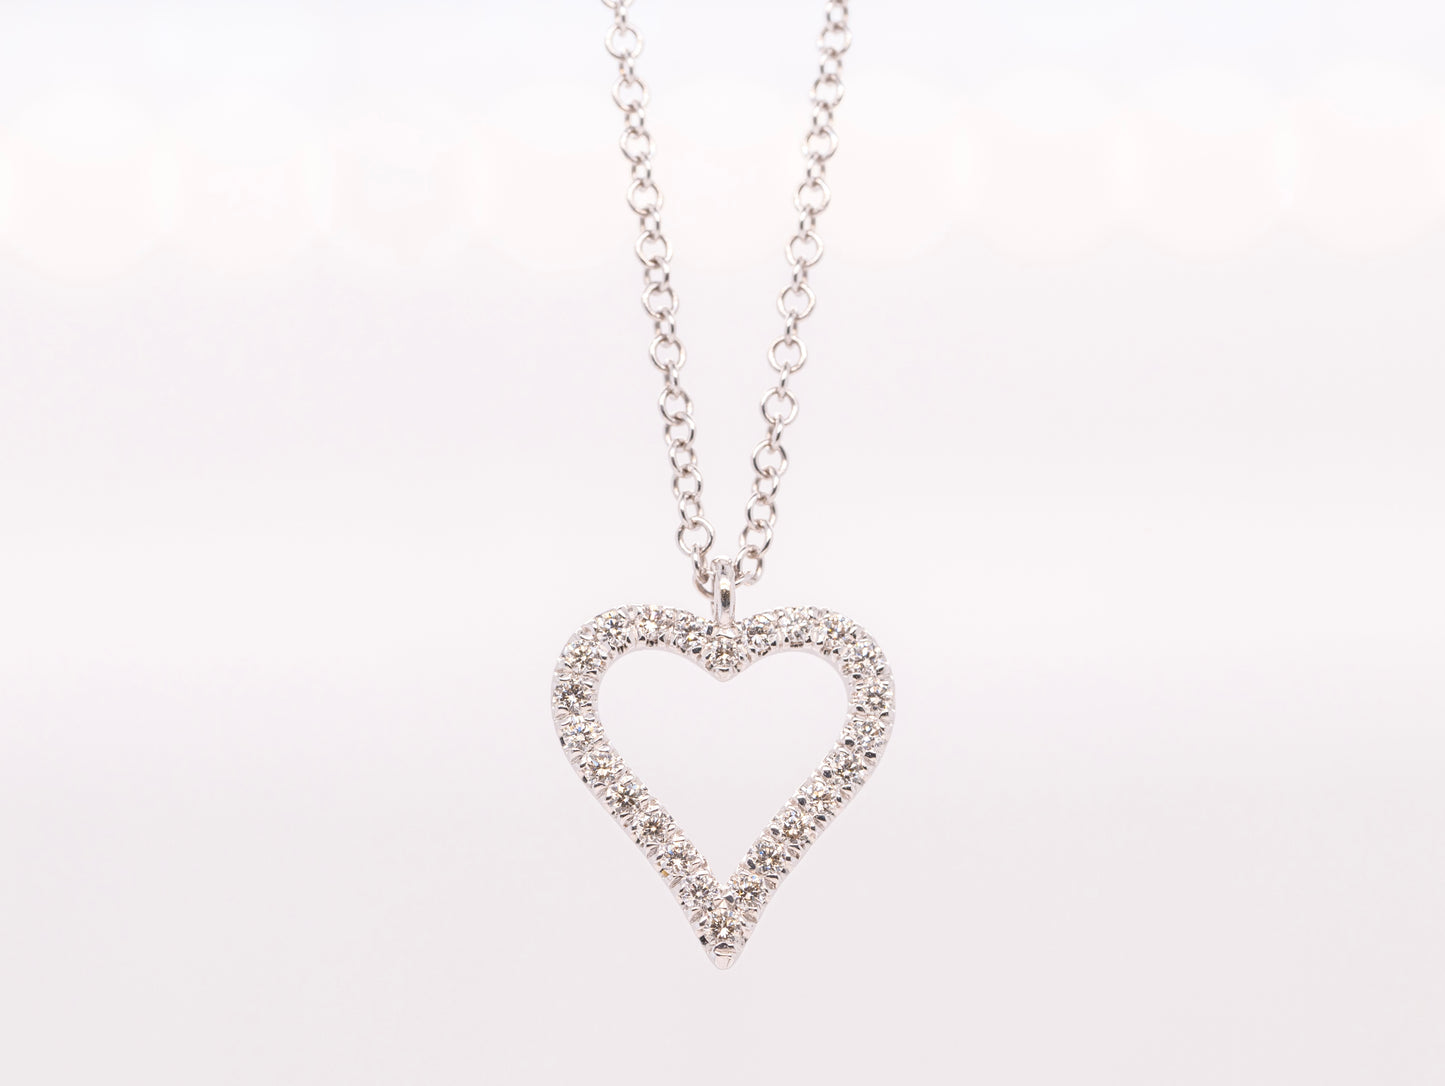 14K White Gold Pave Diamond Open Heart Necklace